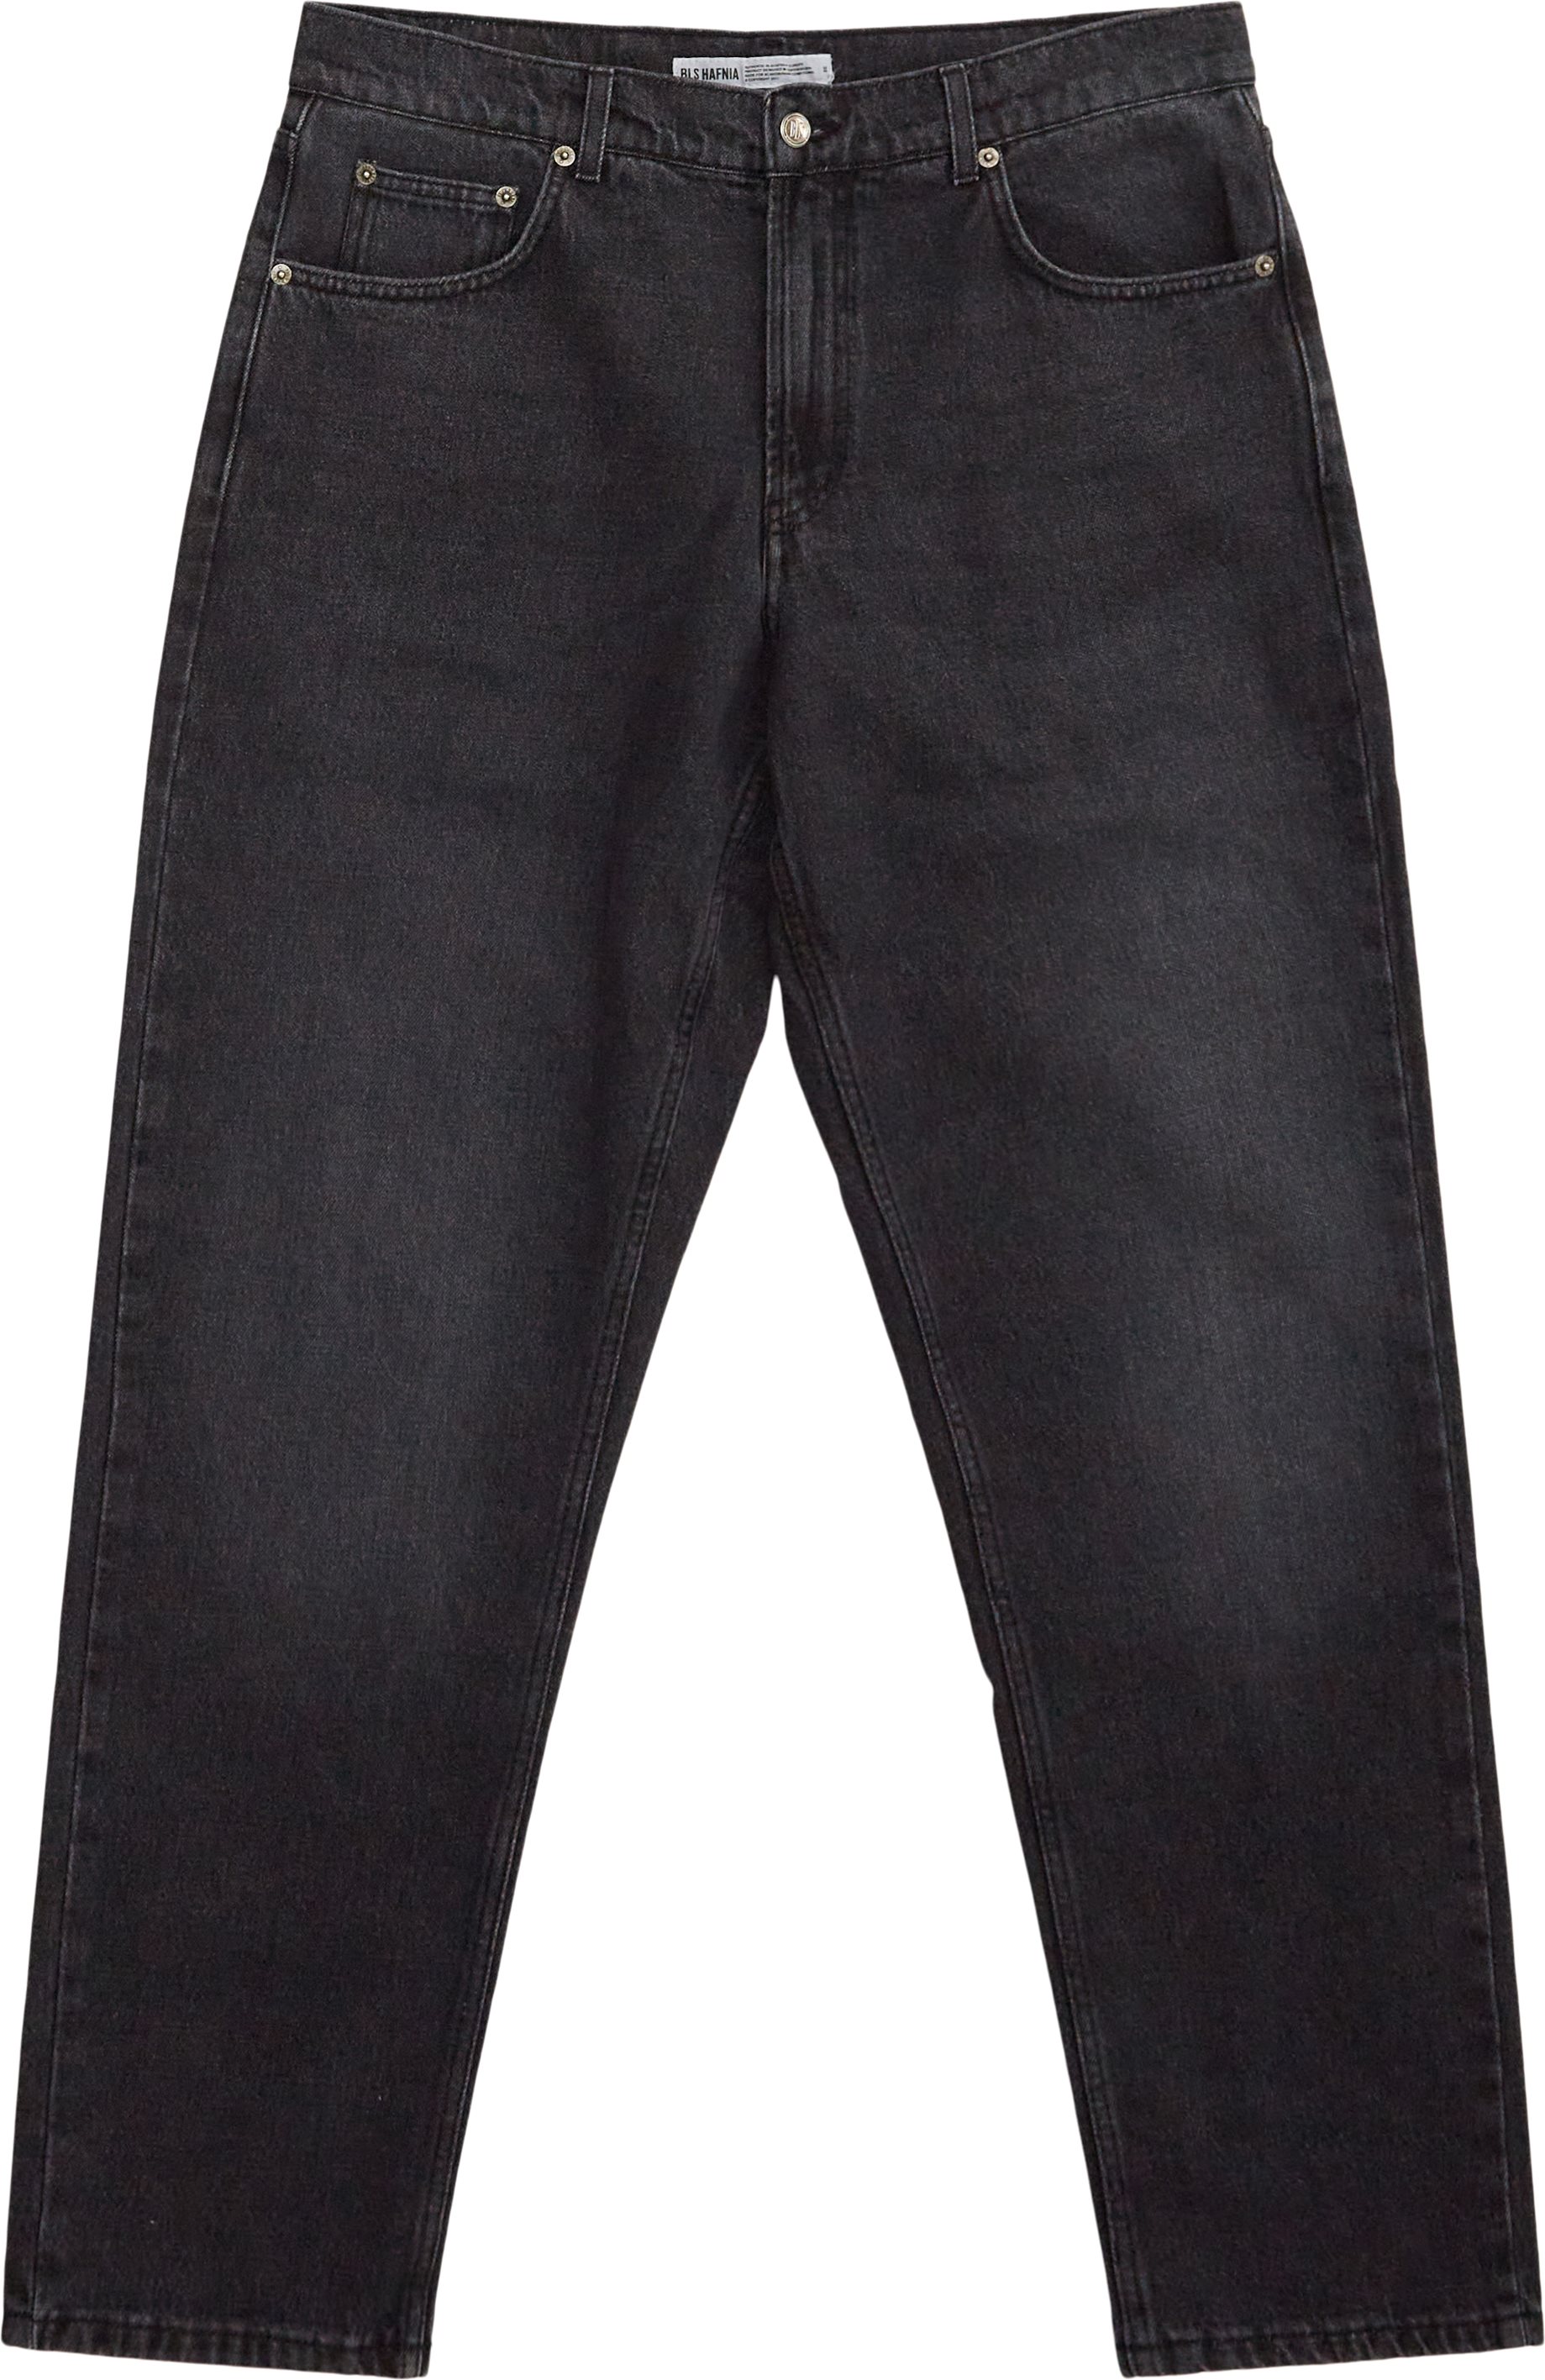 BLS Jeans DAMON JEANS 202403036 Black